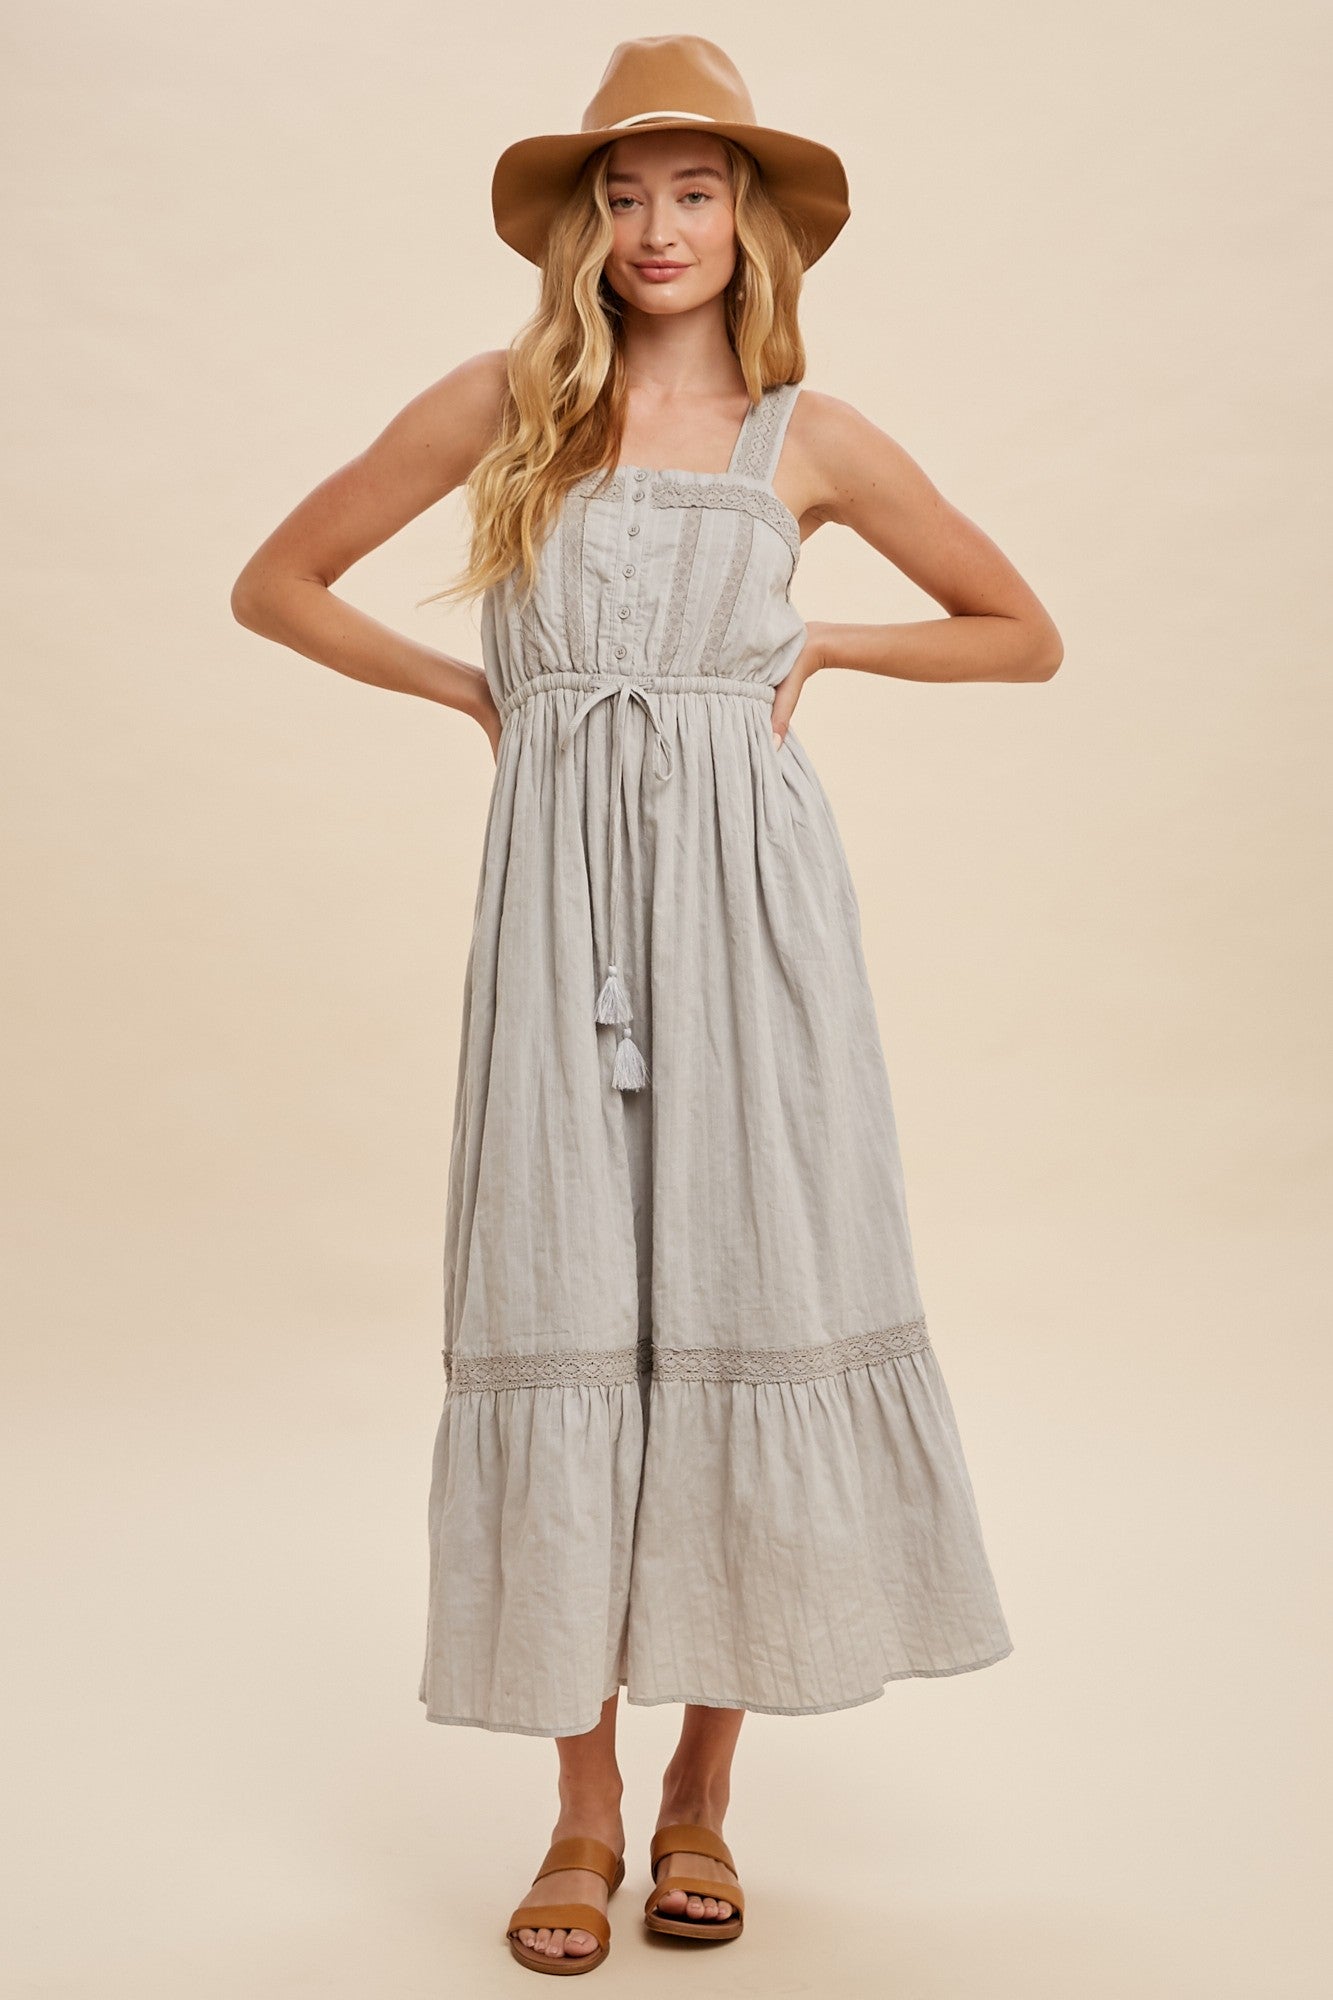 Sleeveless Lace Accent Prairie Dress